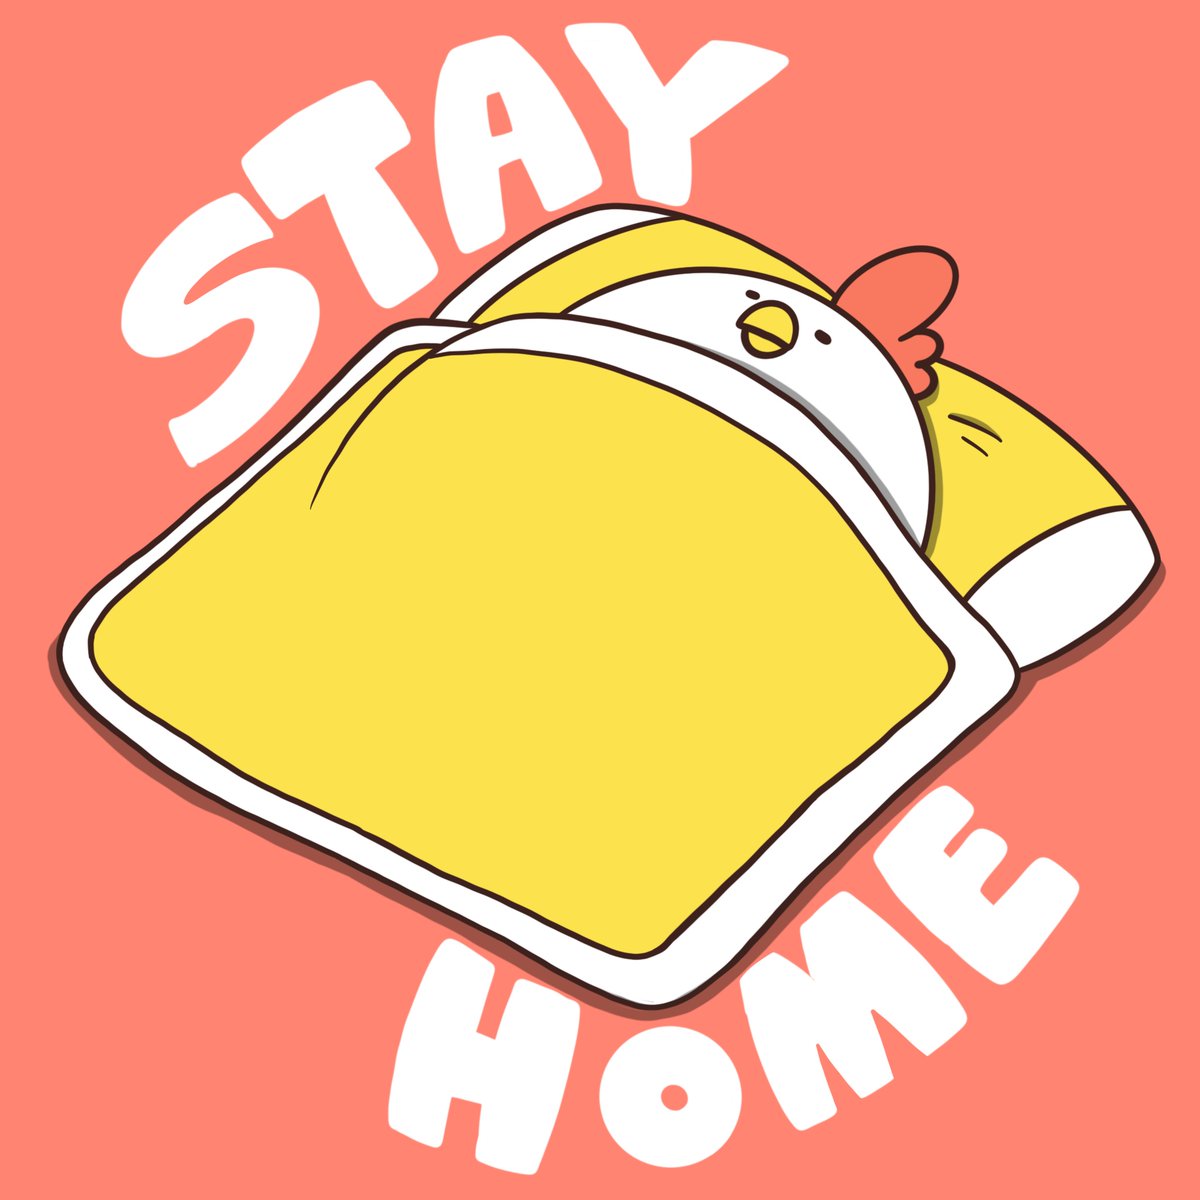 「STAY HOMEアイコンです 」|橋本ナオキ / 会社員でぶどりのイラスト